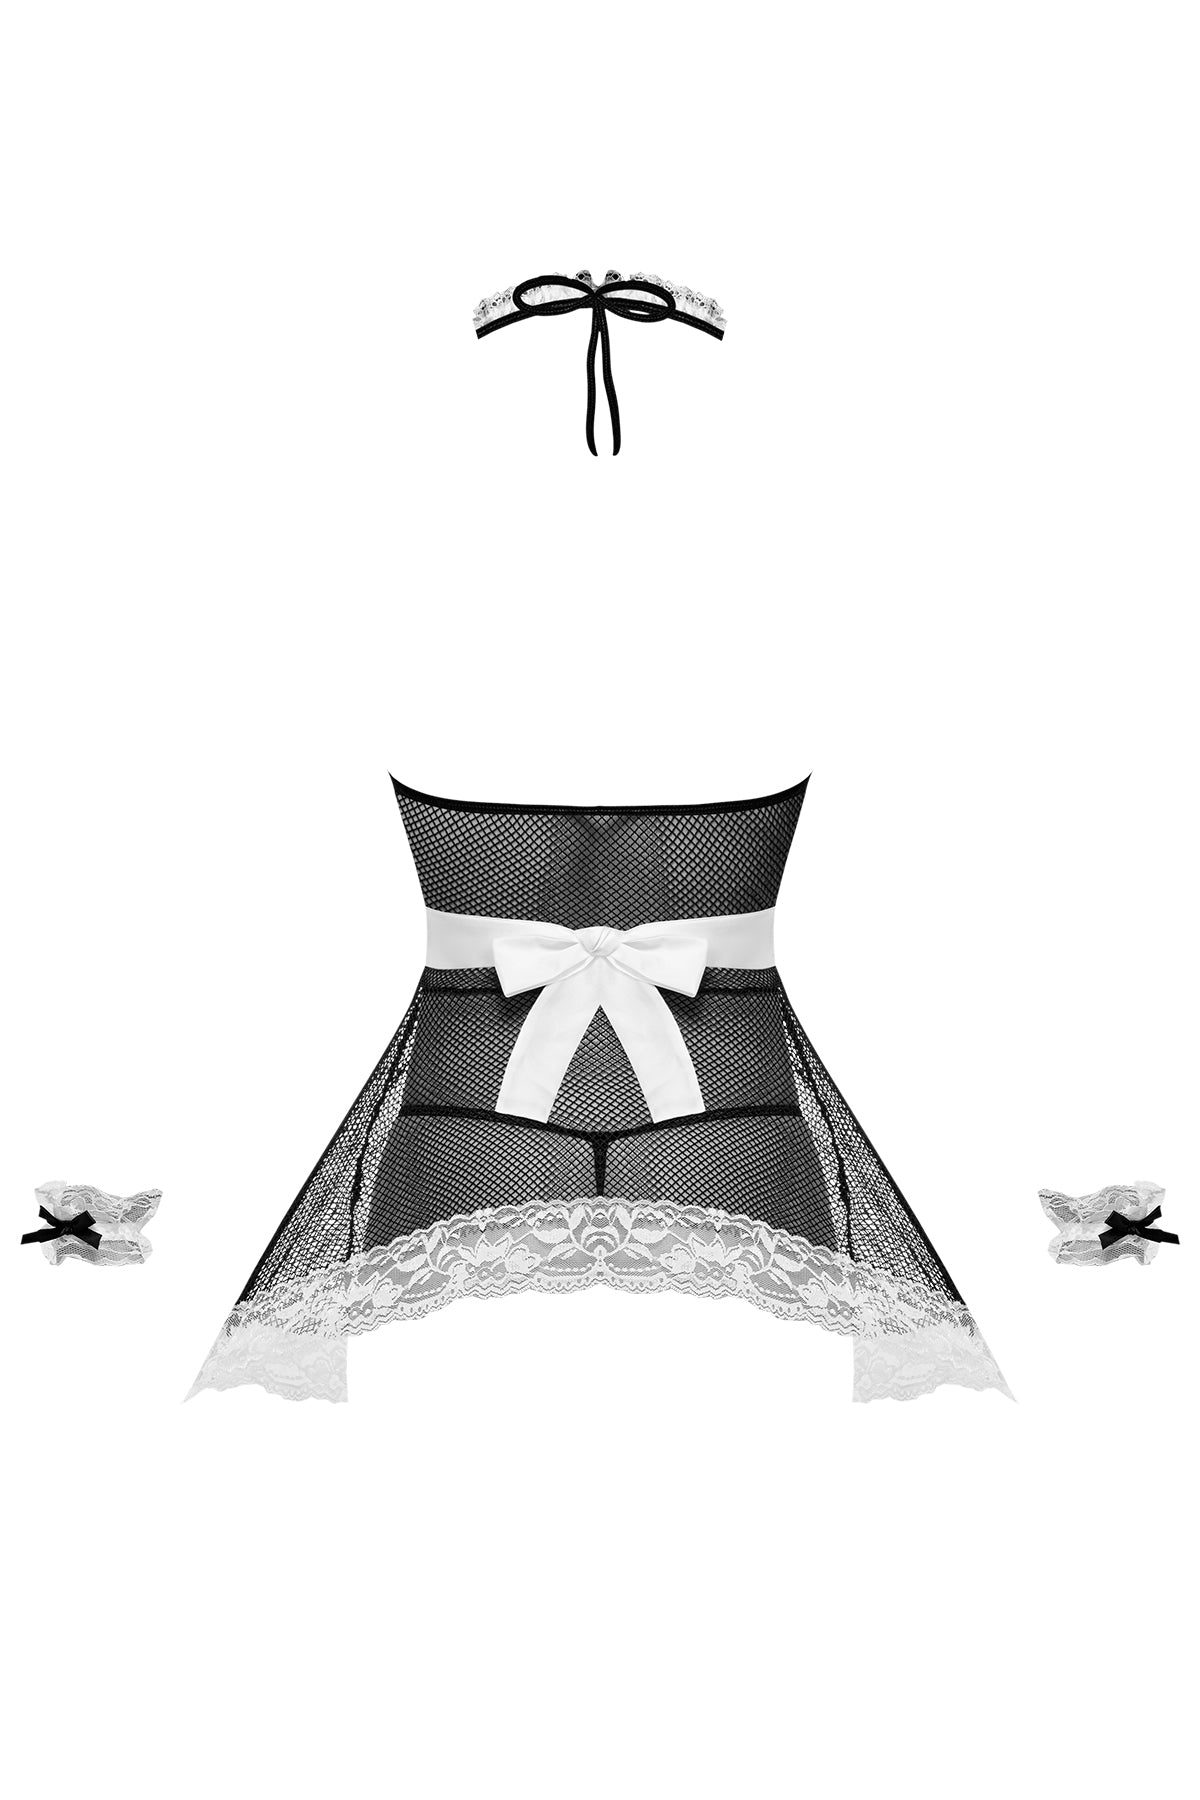 Magic Silk Chamber Maid Bedroom Fantasy Costume Black